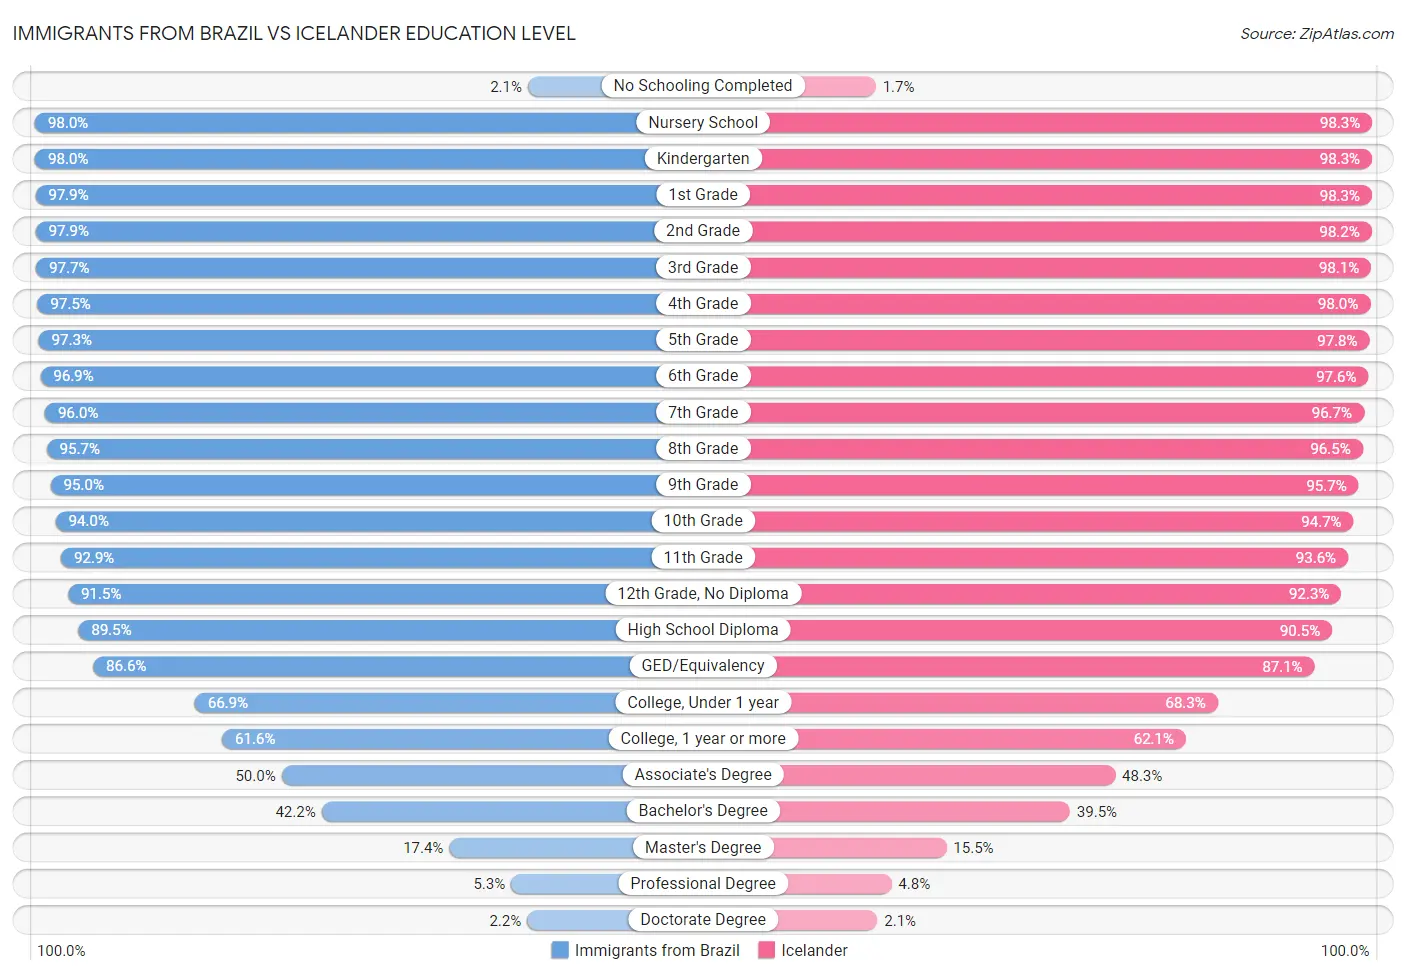 Immigrants from Brazil vs Icelander Education Level